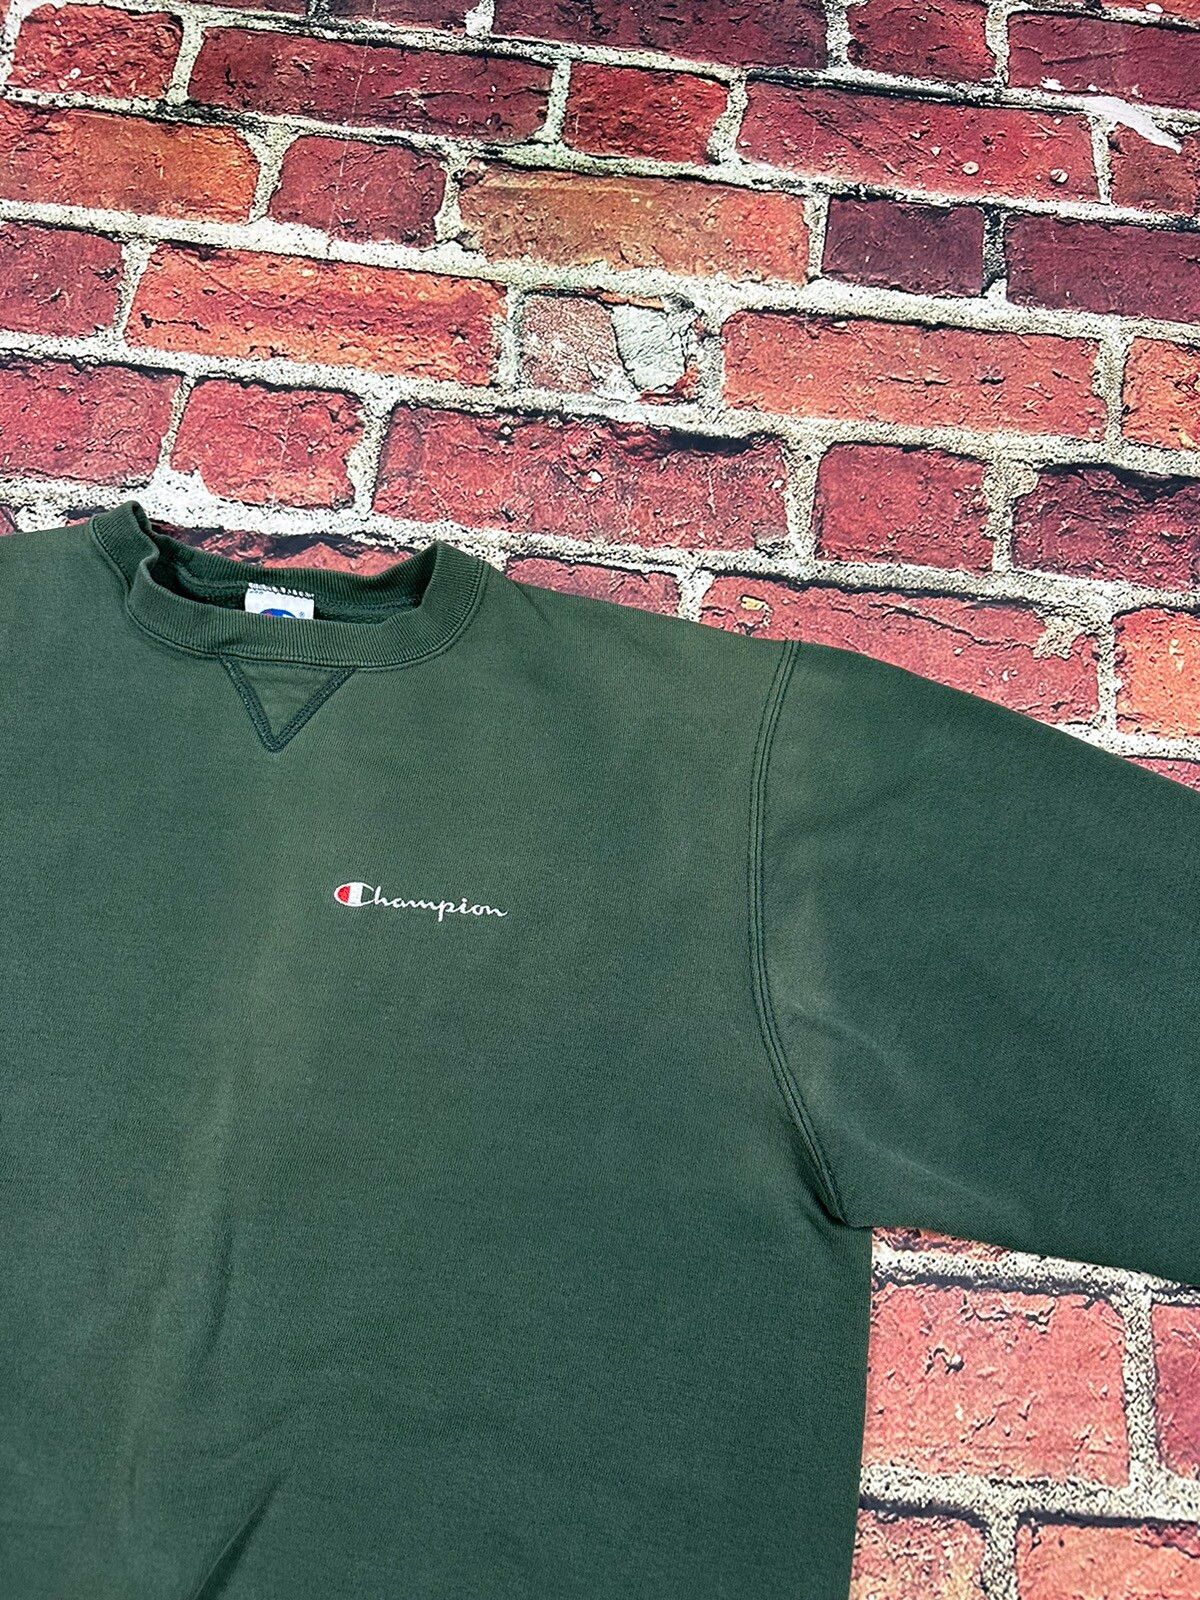 Vintage Vintage 90s Champion Sweatshirt Green Spell Out Crewneck Size US XL / EU 56 / 4 - 9 Preview